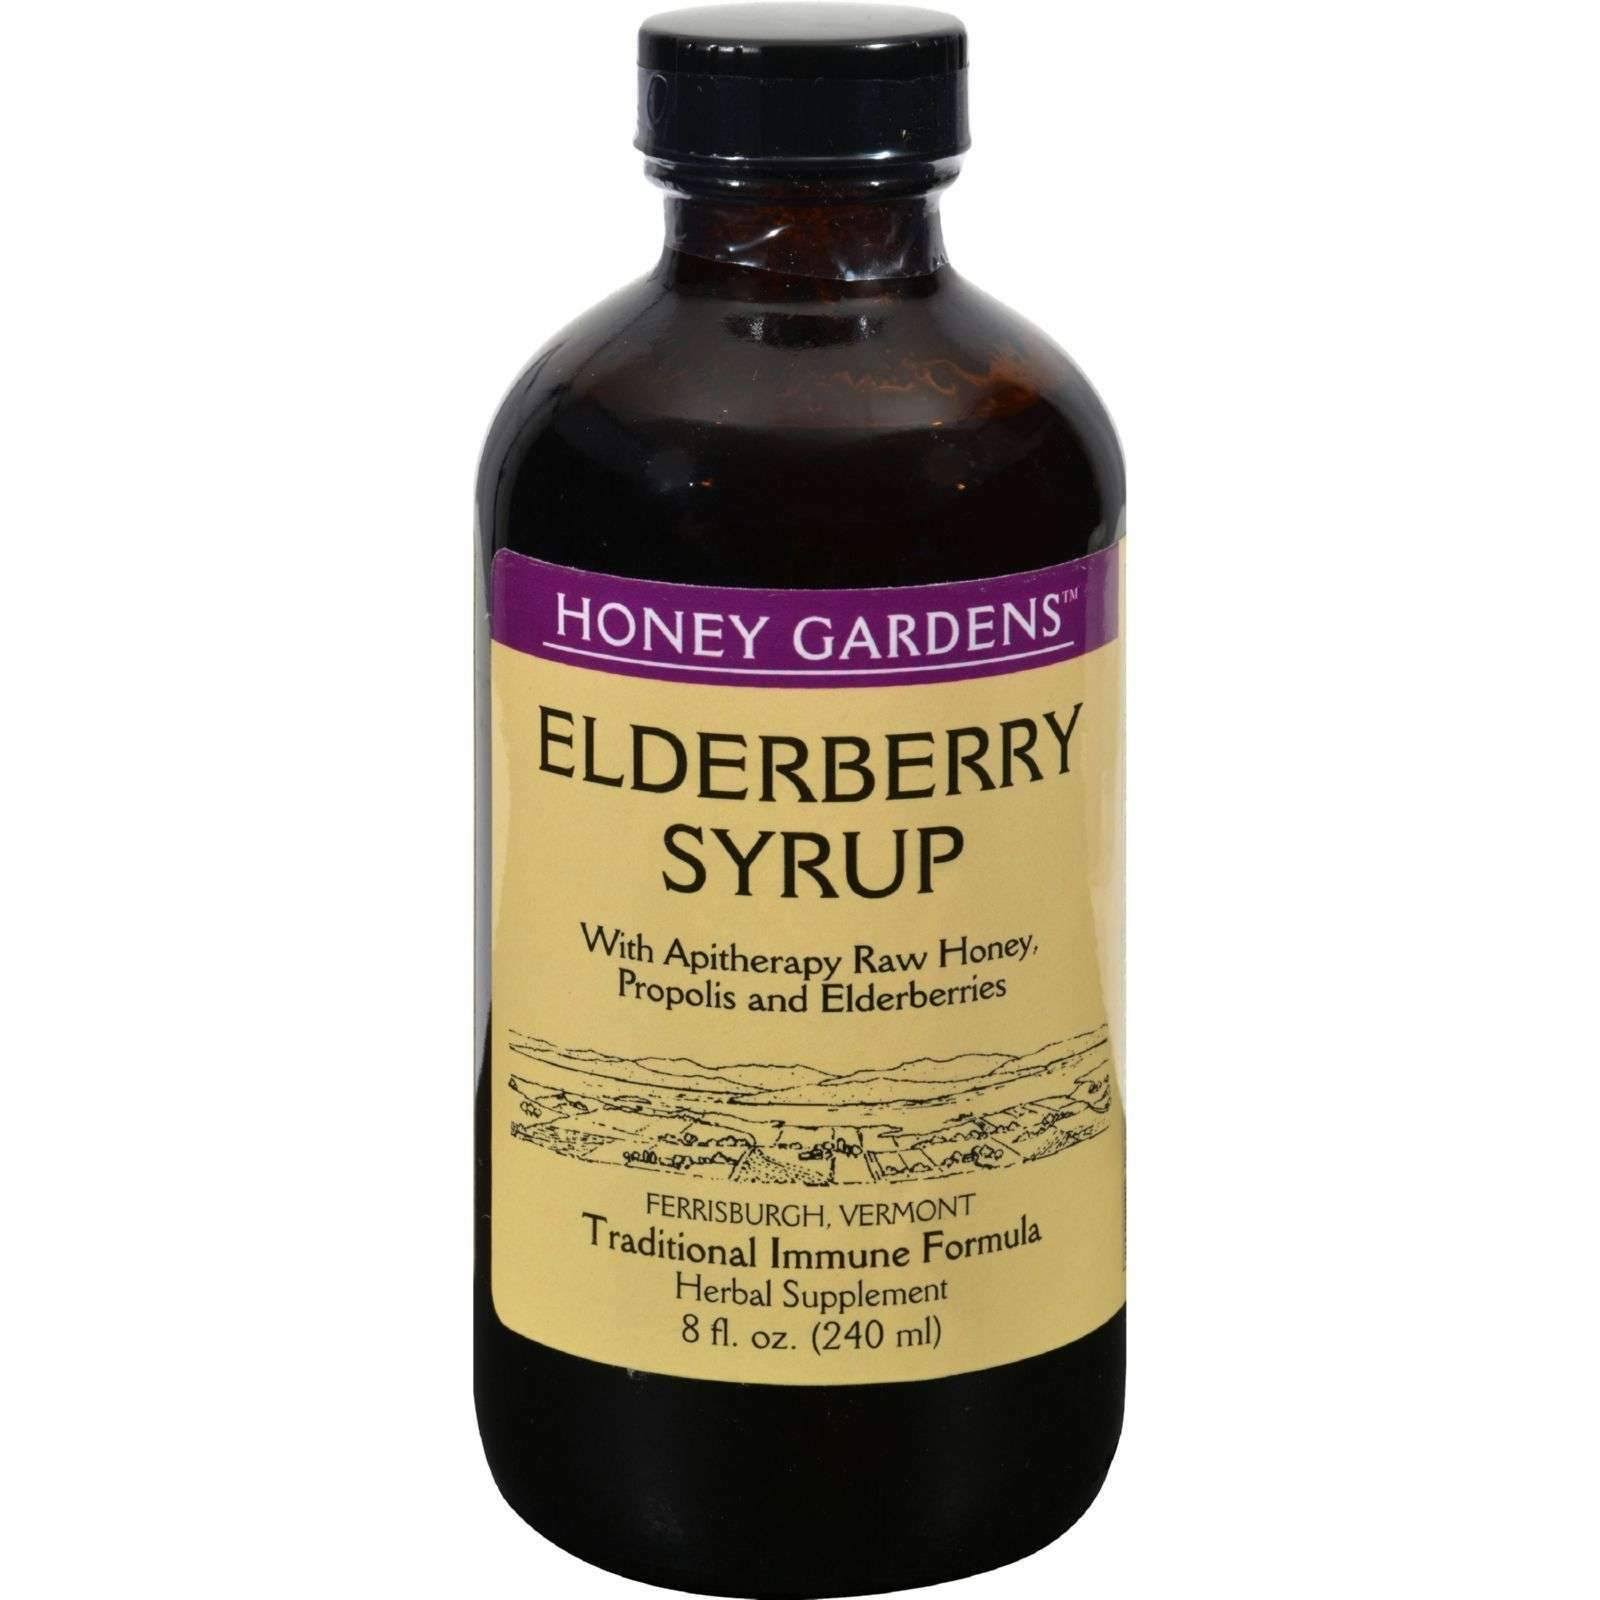 Honey Garden Apitherapy Organic Elderberry Syrup Extract - with Propolis, 8oz